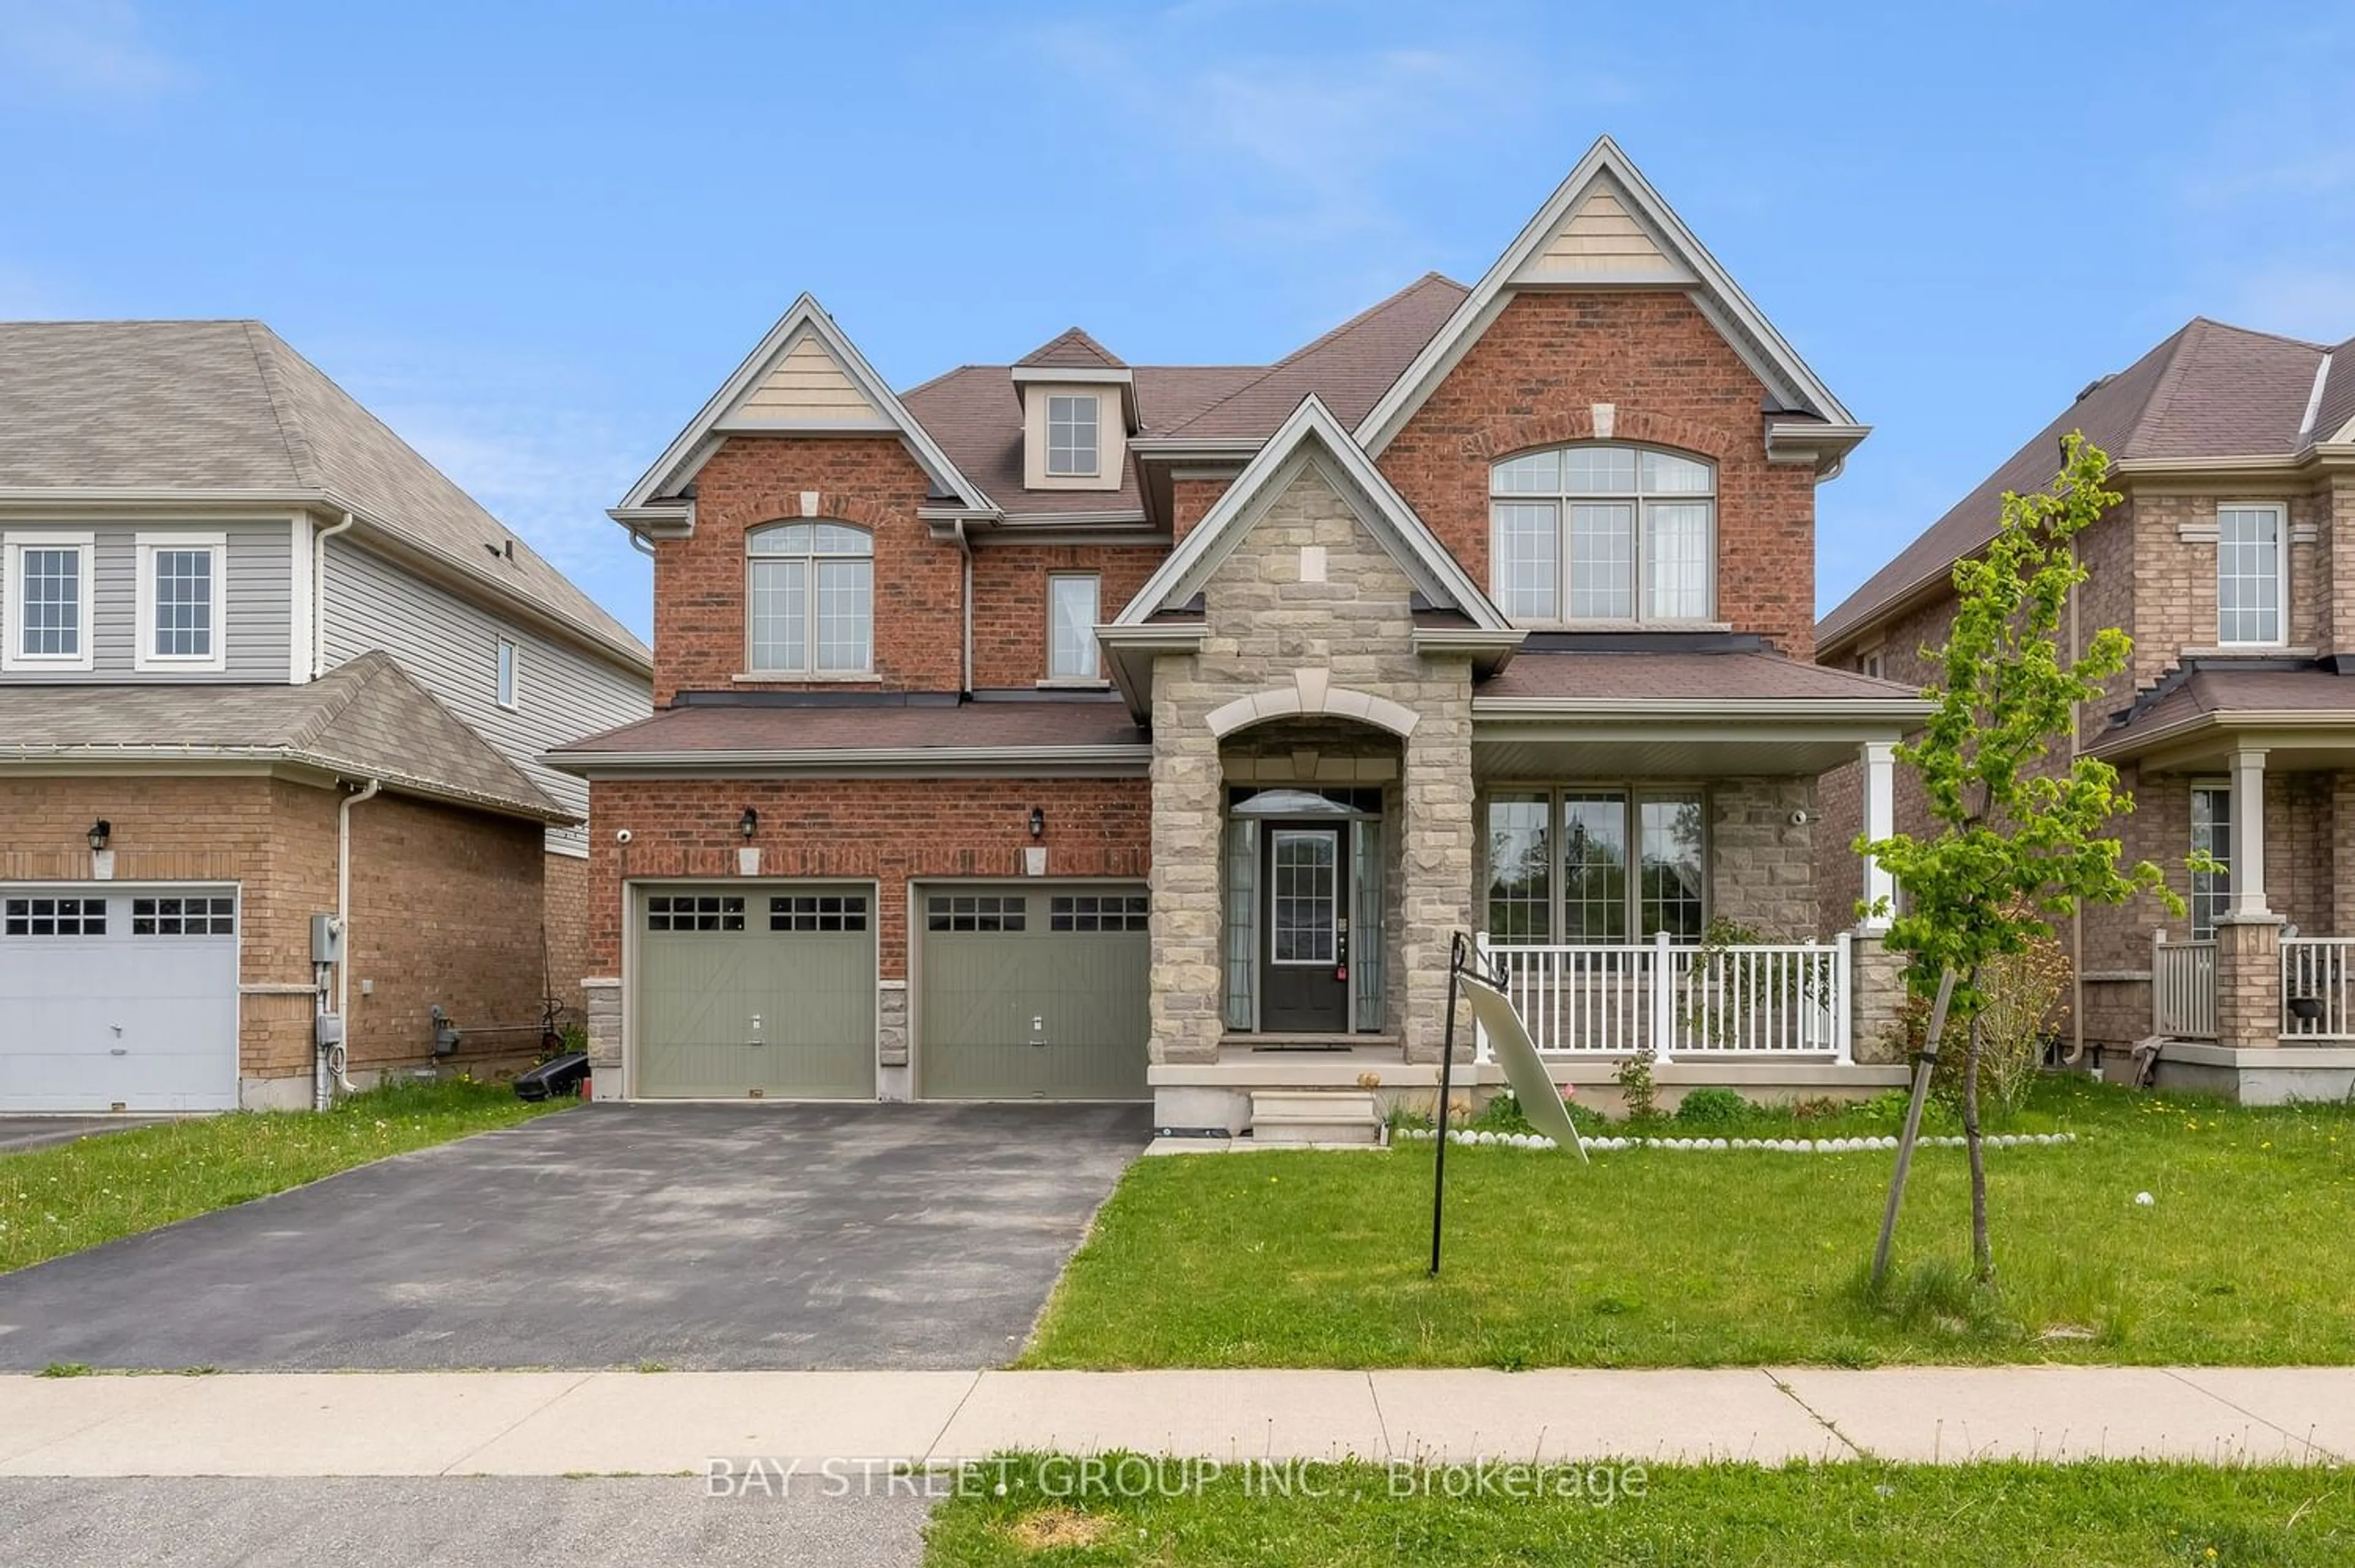 Home with brick exterior material for 7590 Butternut Blvd, Niagara Falls Ontario L2H 0K8